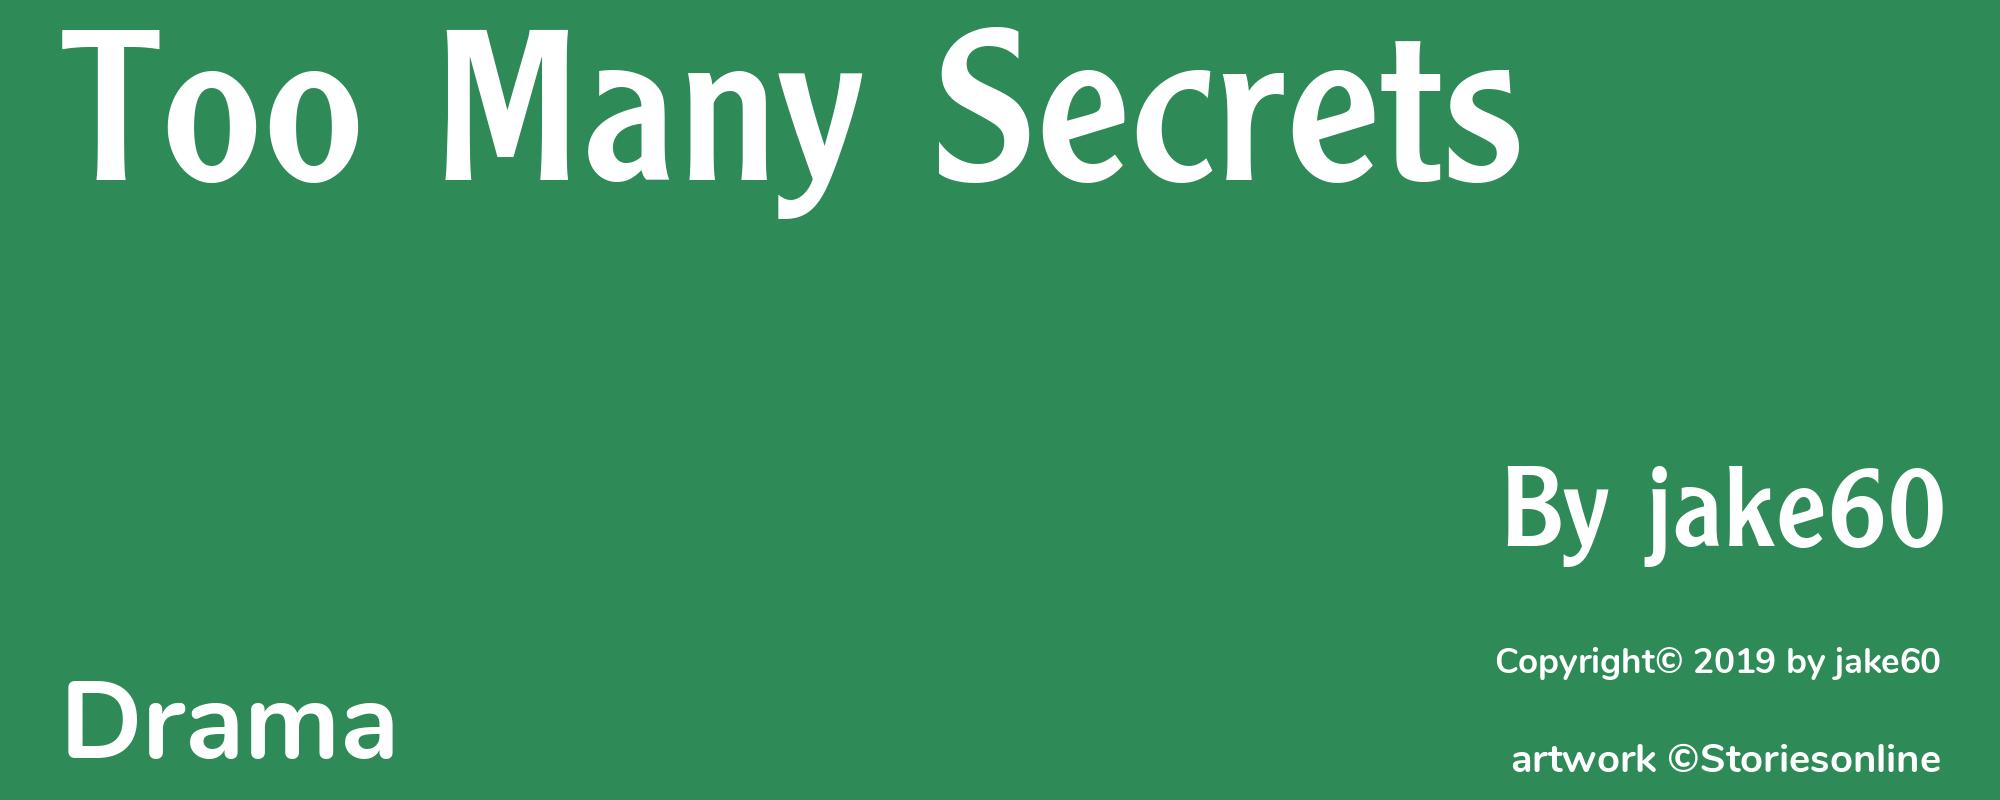 Too Many Secrets - Cover